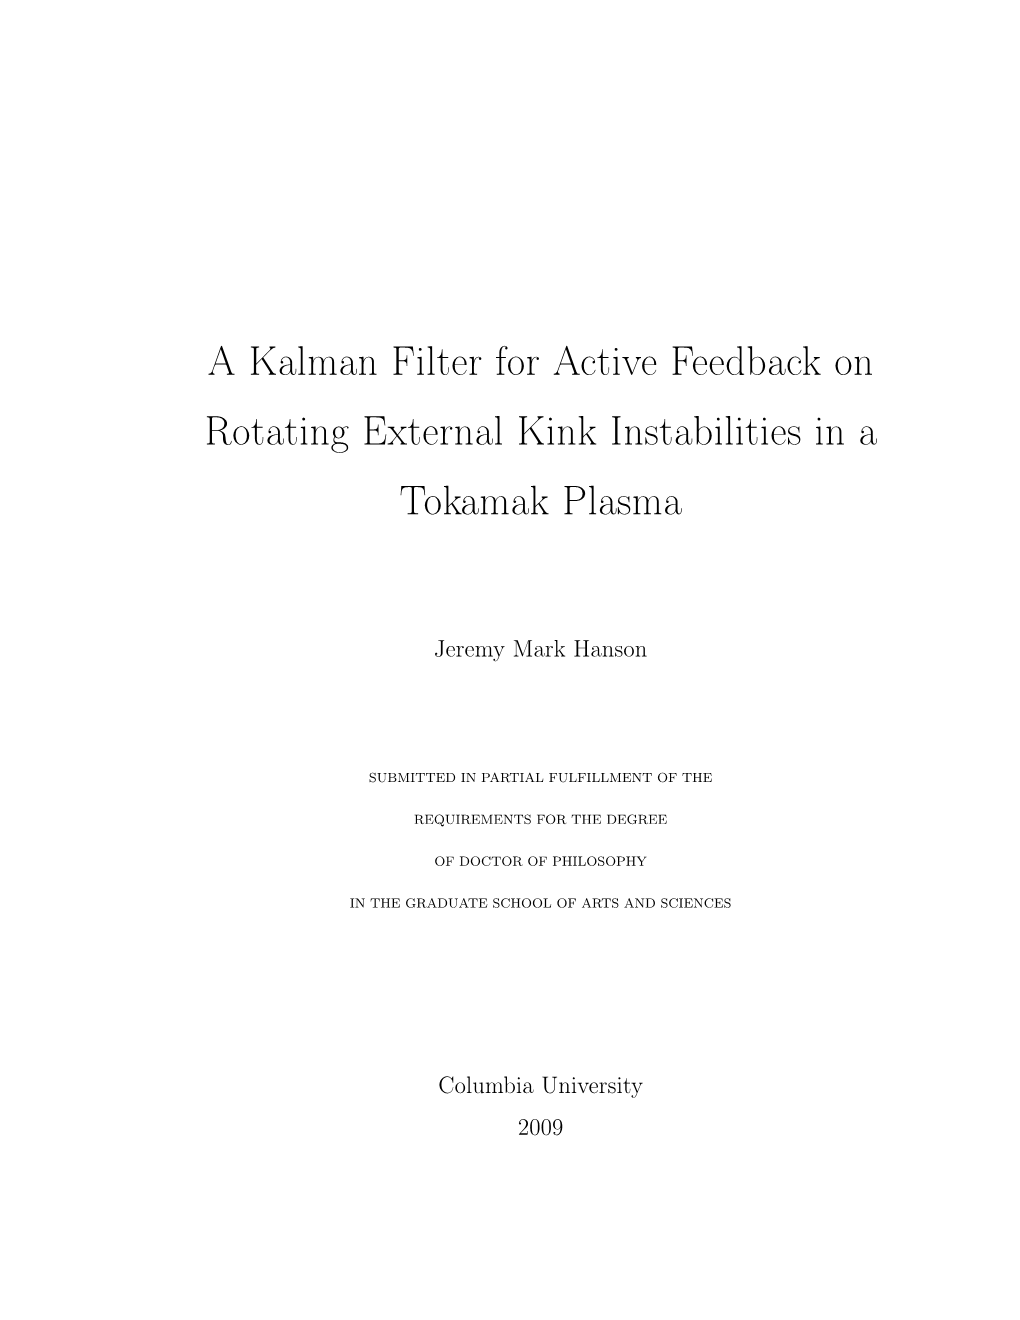 A Kalman Filter for Active Feedback on Rotating External Kink Instabilities in a Tokamak Plasma